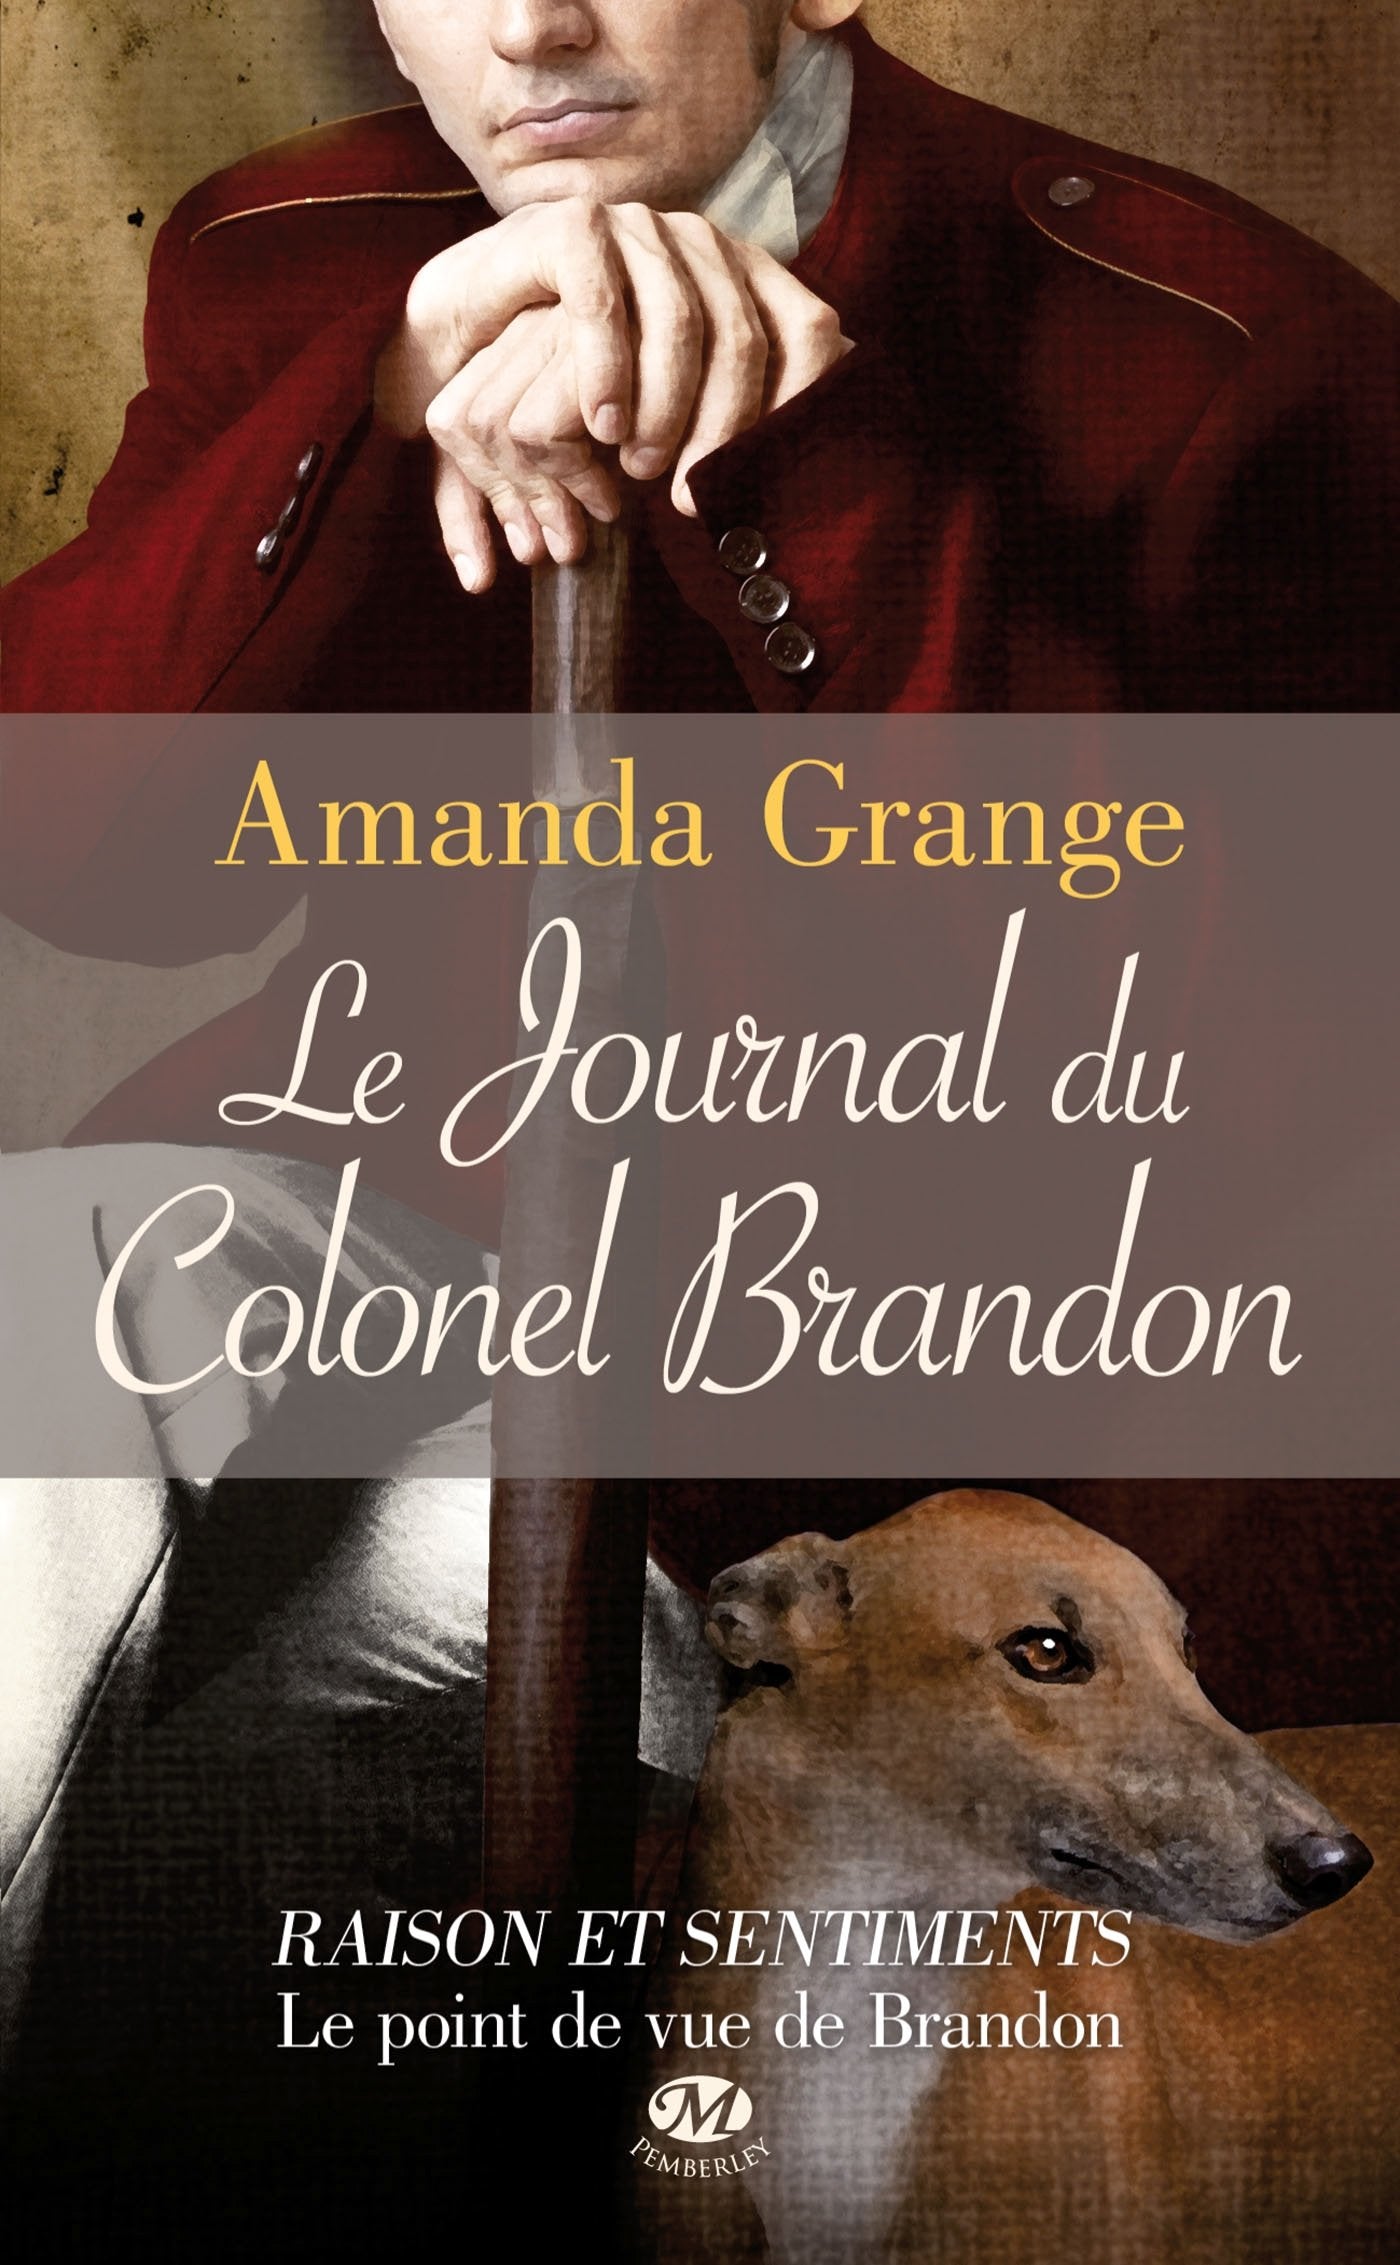 Livre ISBN 2811209905 Le journal du Colonel Brandon (Amanda Grange)